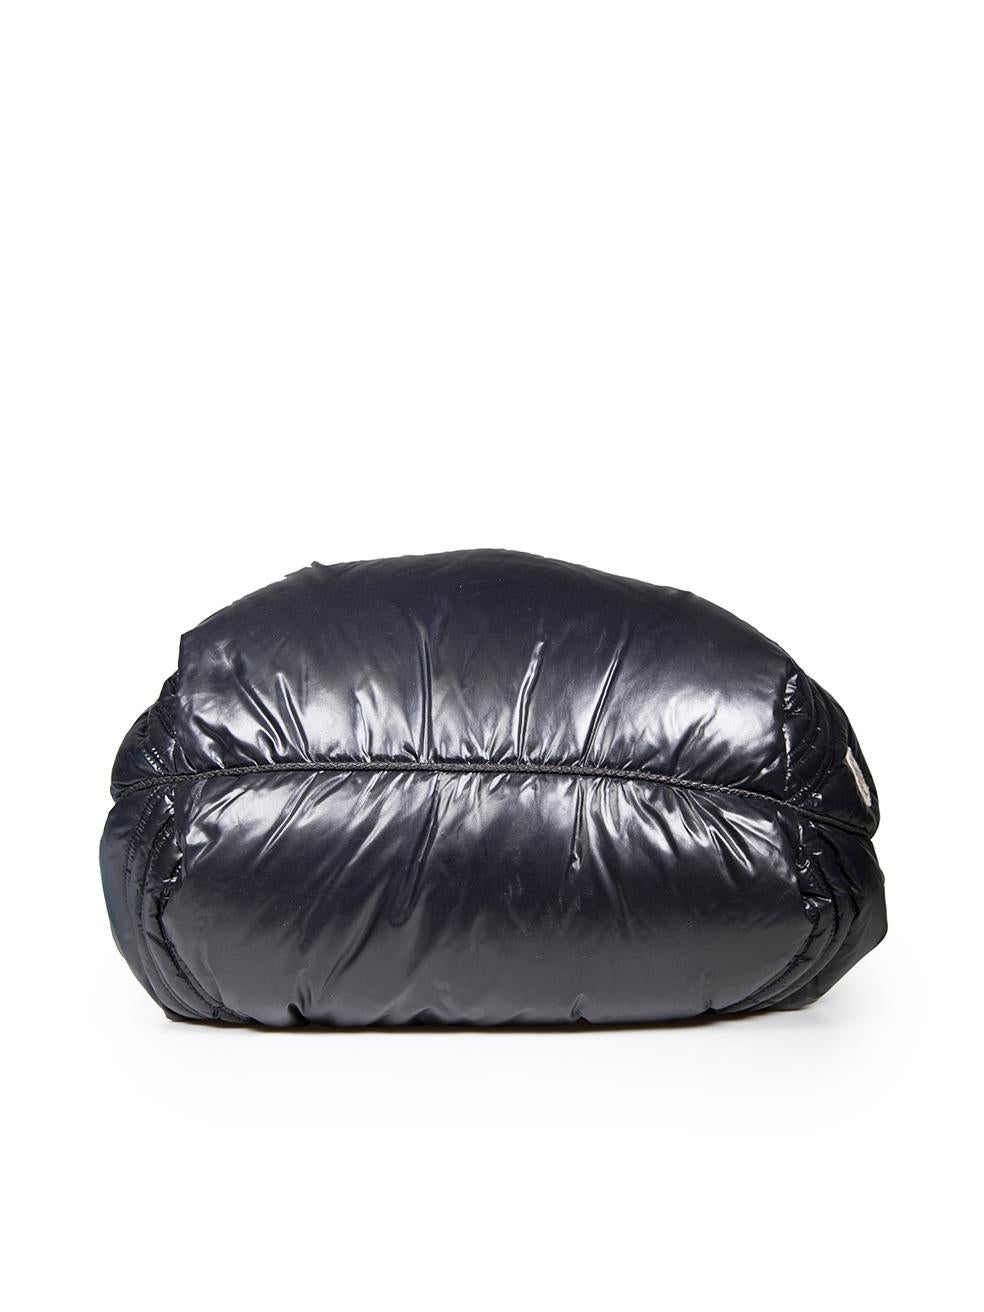 Fendi Fendi x Moncler Black Puffer Spy Bag Pour femmes en vente